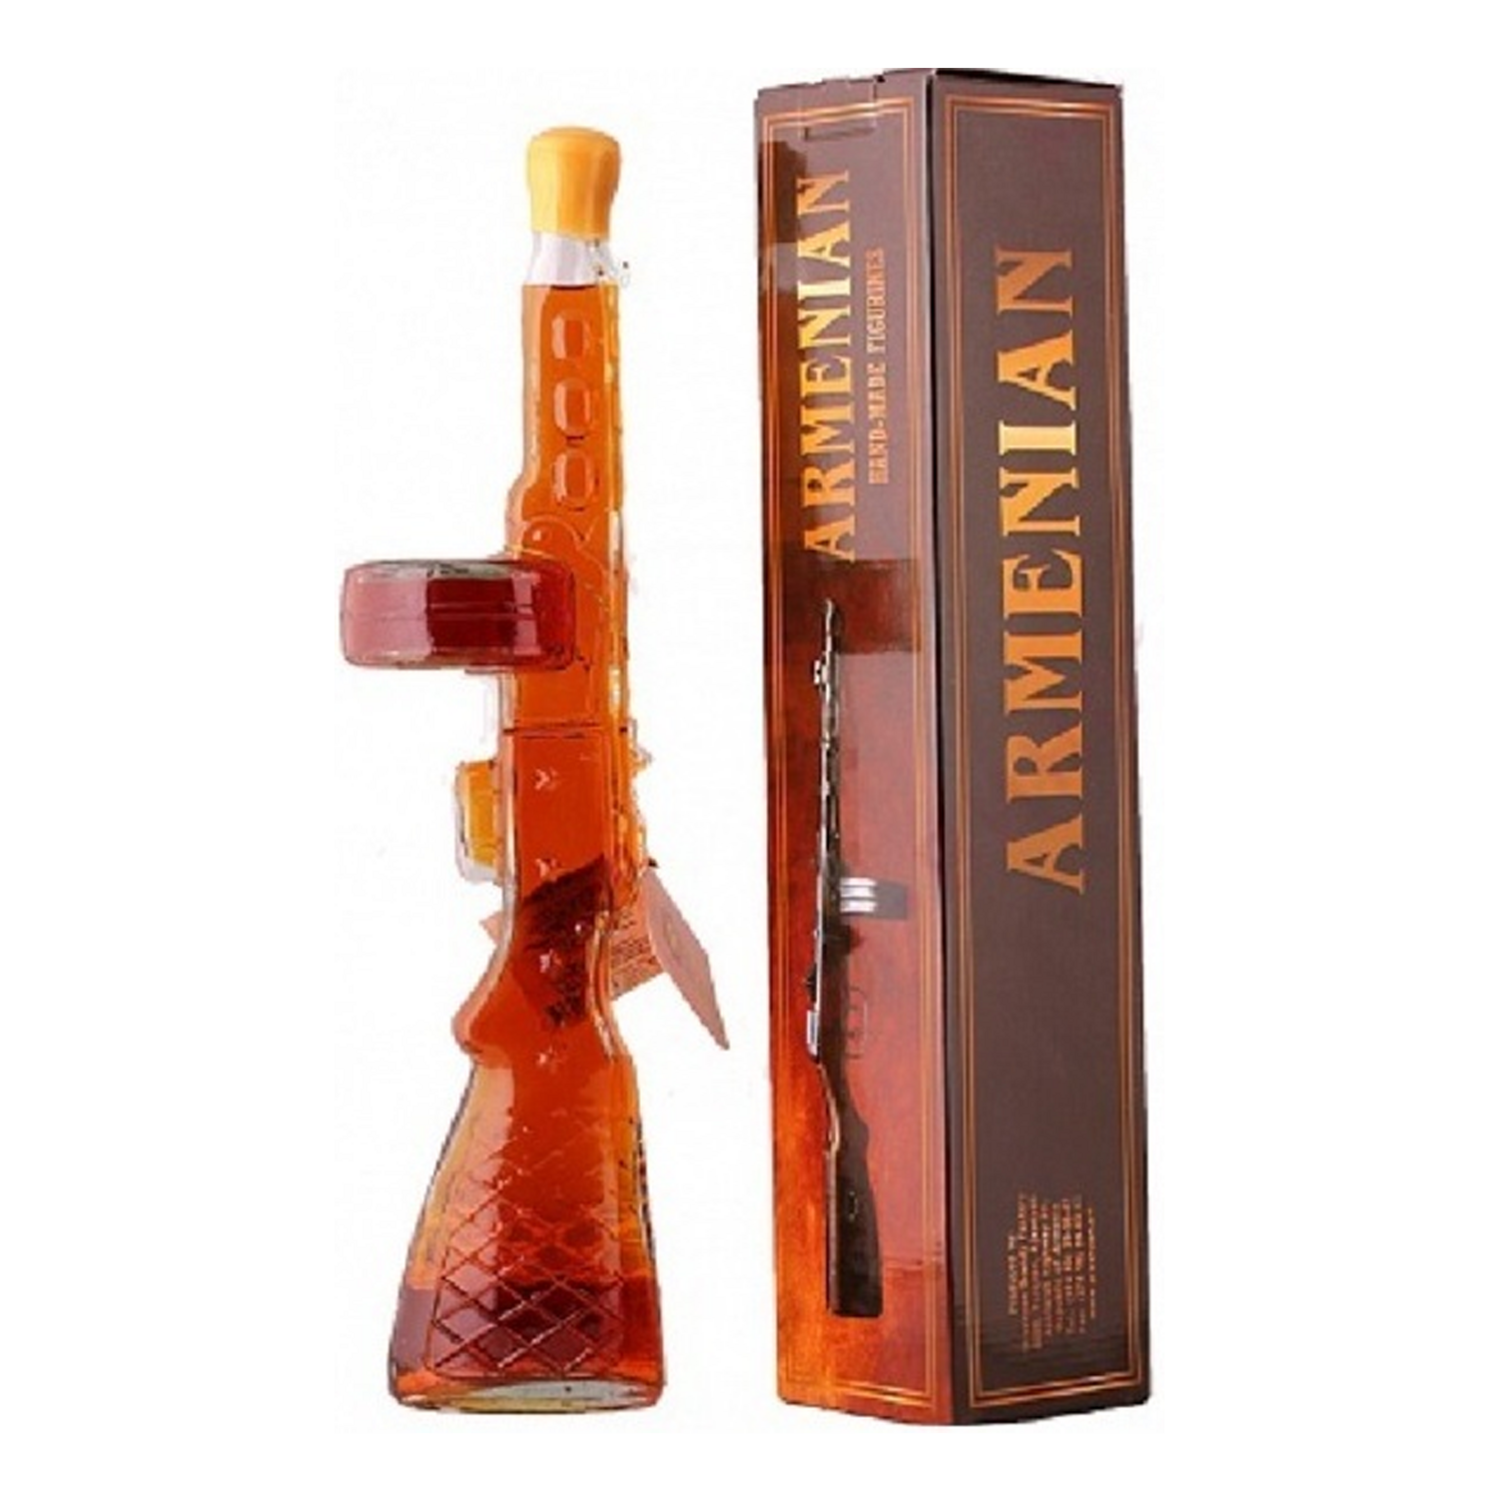 Armenian "Automat" Brandy